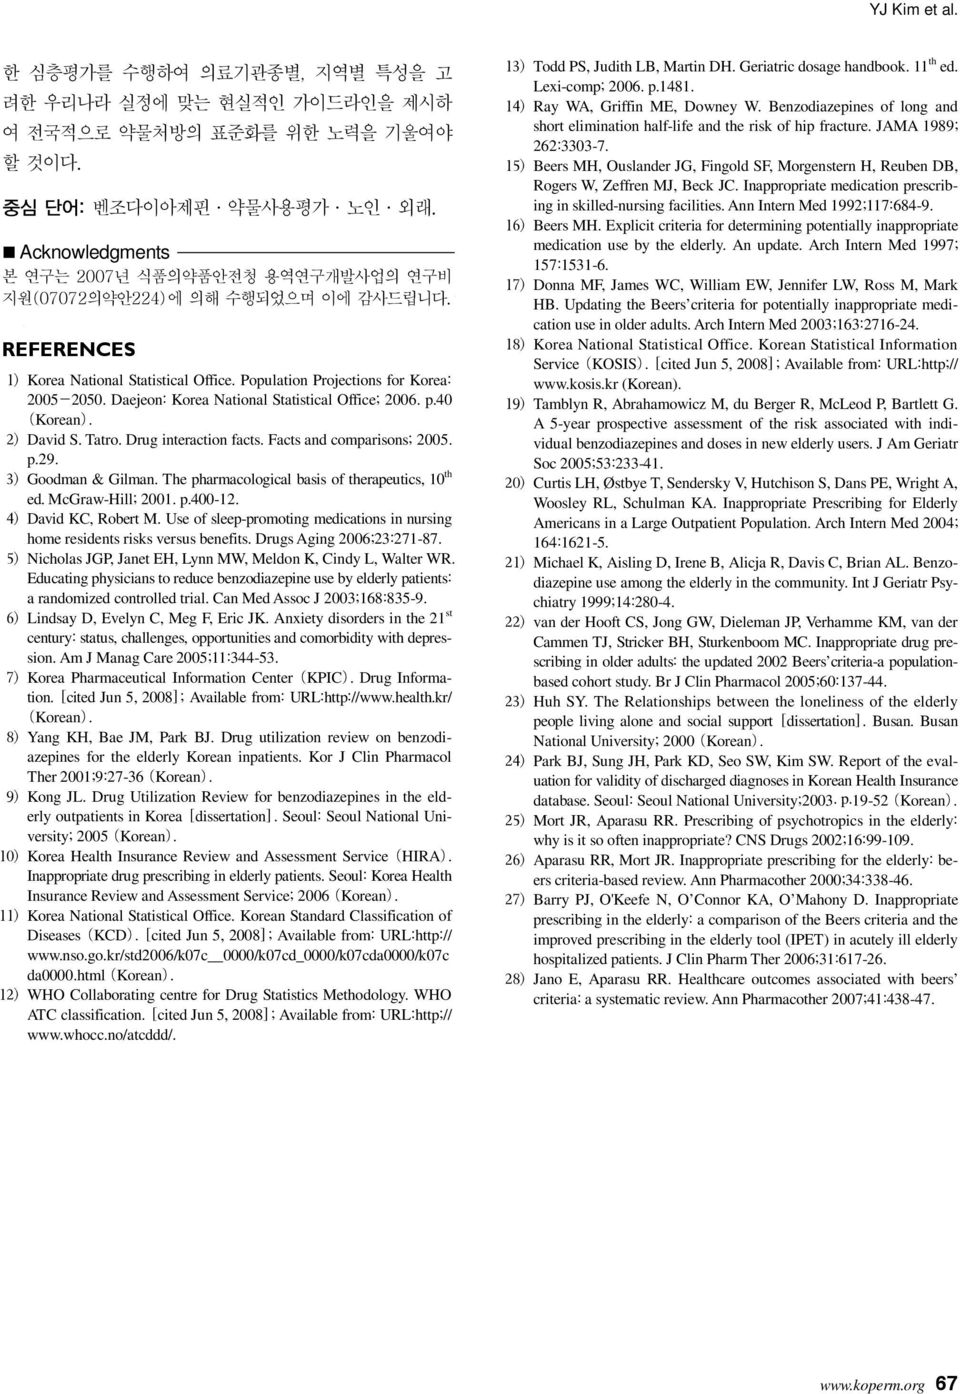 Daejeon: Korea National Statistical Office; 2006. p.40 (Korean). 2) David S. Tatro. Drug interaction facts. Facts and comparisons; 2005. p.29. 3) Goodman & Gilman.